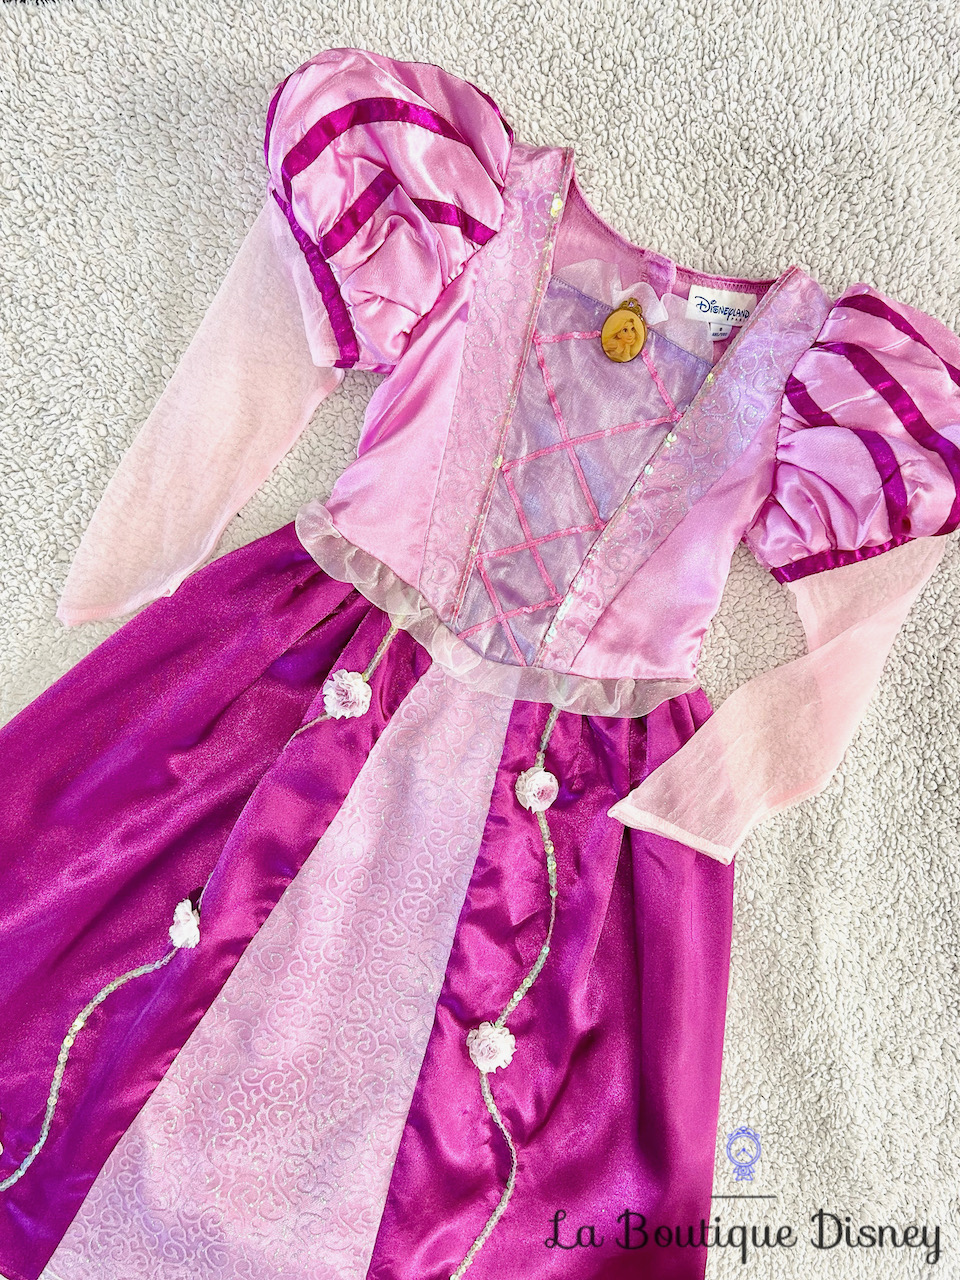 Déguisement Raiponce Disneyland Paris Disney taille 8 ans robe princesse violet rose